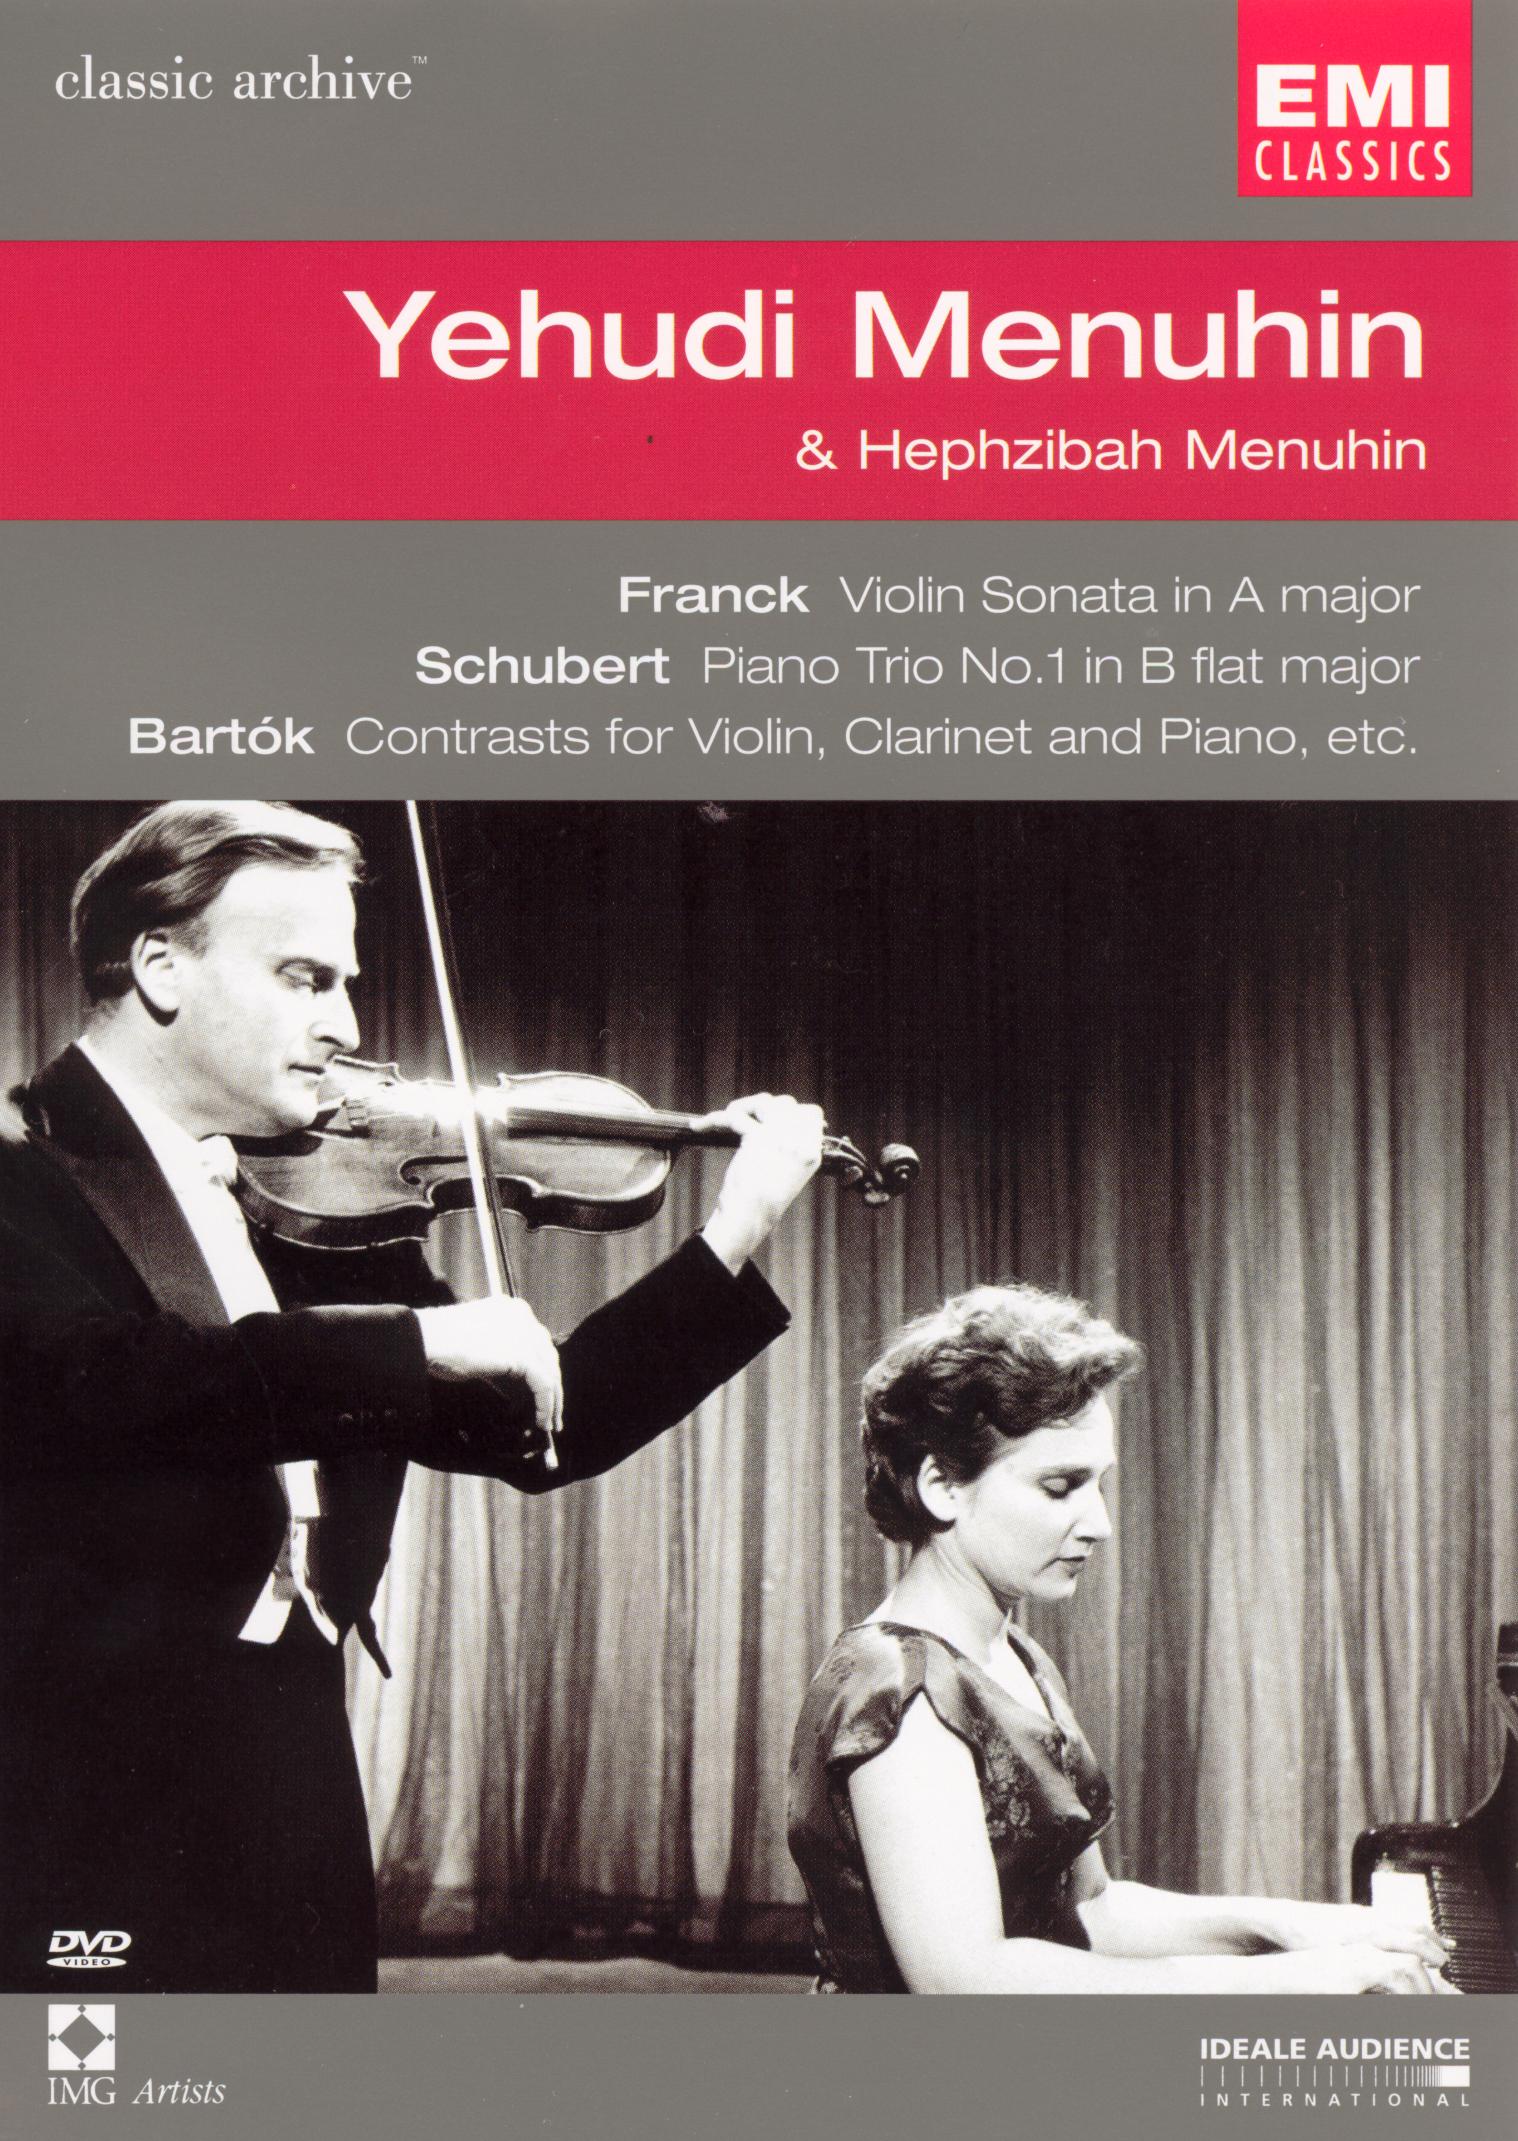 Classic Archive: Yehudi Menuhin & Hephzibah Menuhin (1972) - | Synopsis